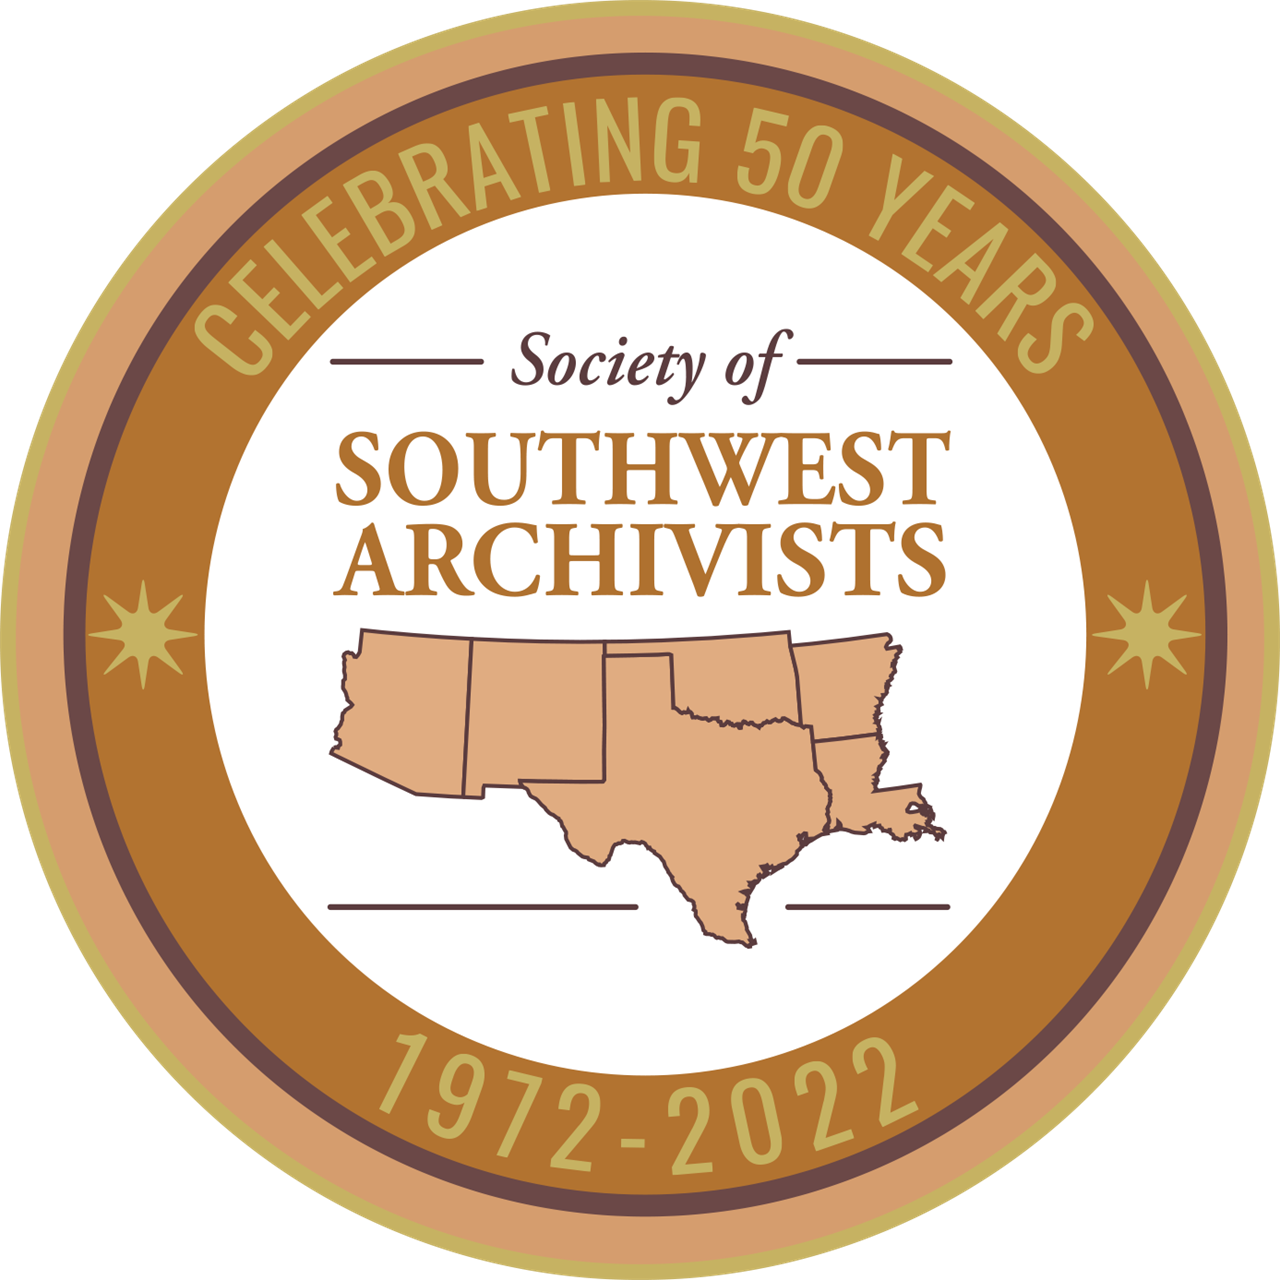 Society of Southwest Archivists Celebrating 50 Years 1972-2022 round logo